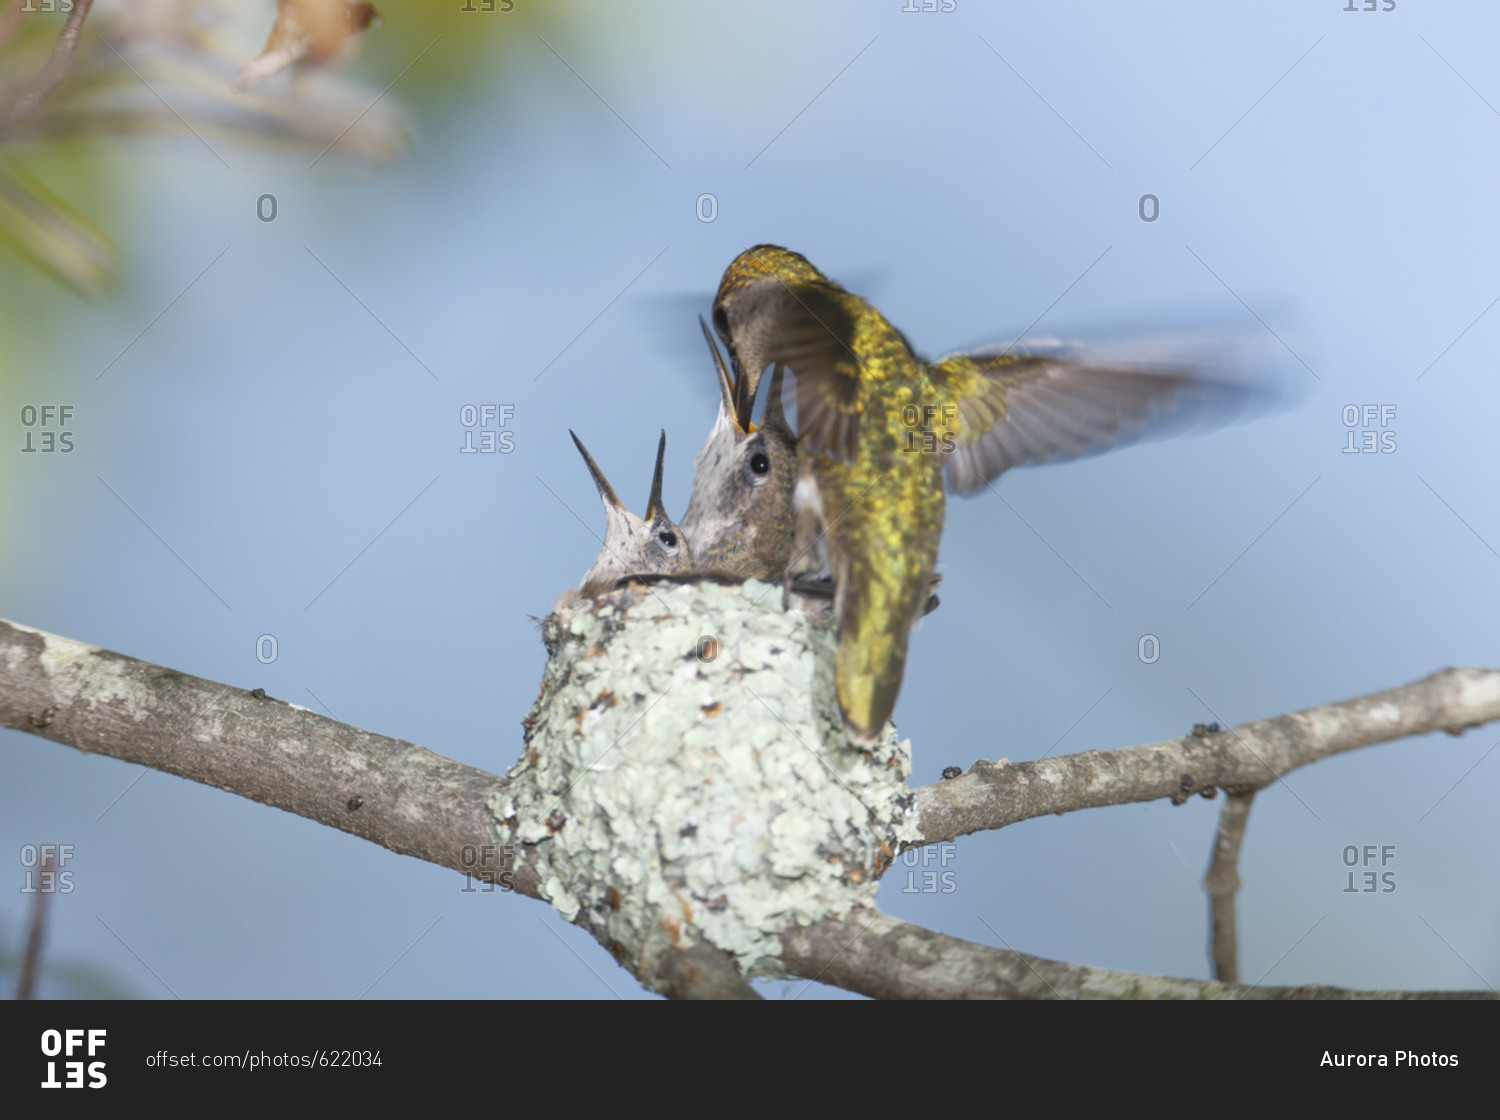 Ruby-throated hummingbird (Archilochus colubris) feeding chicks in nest, Rehoboth, Massachusetts, USA